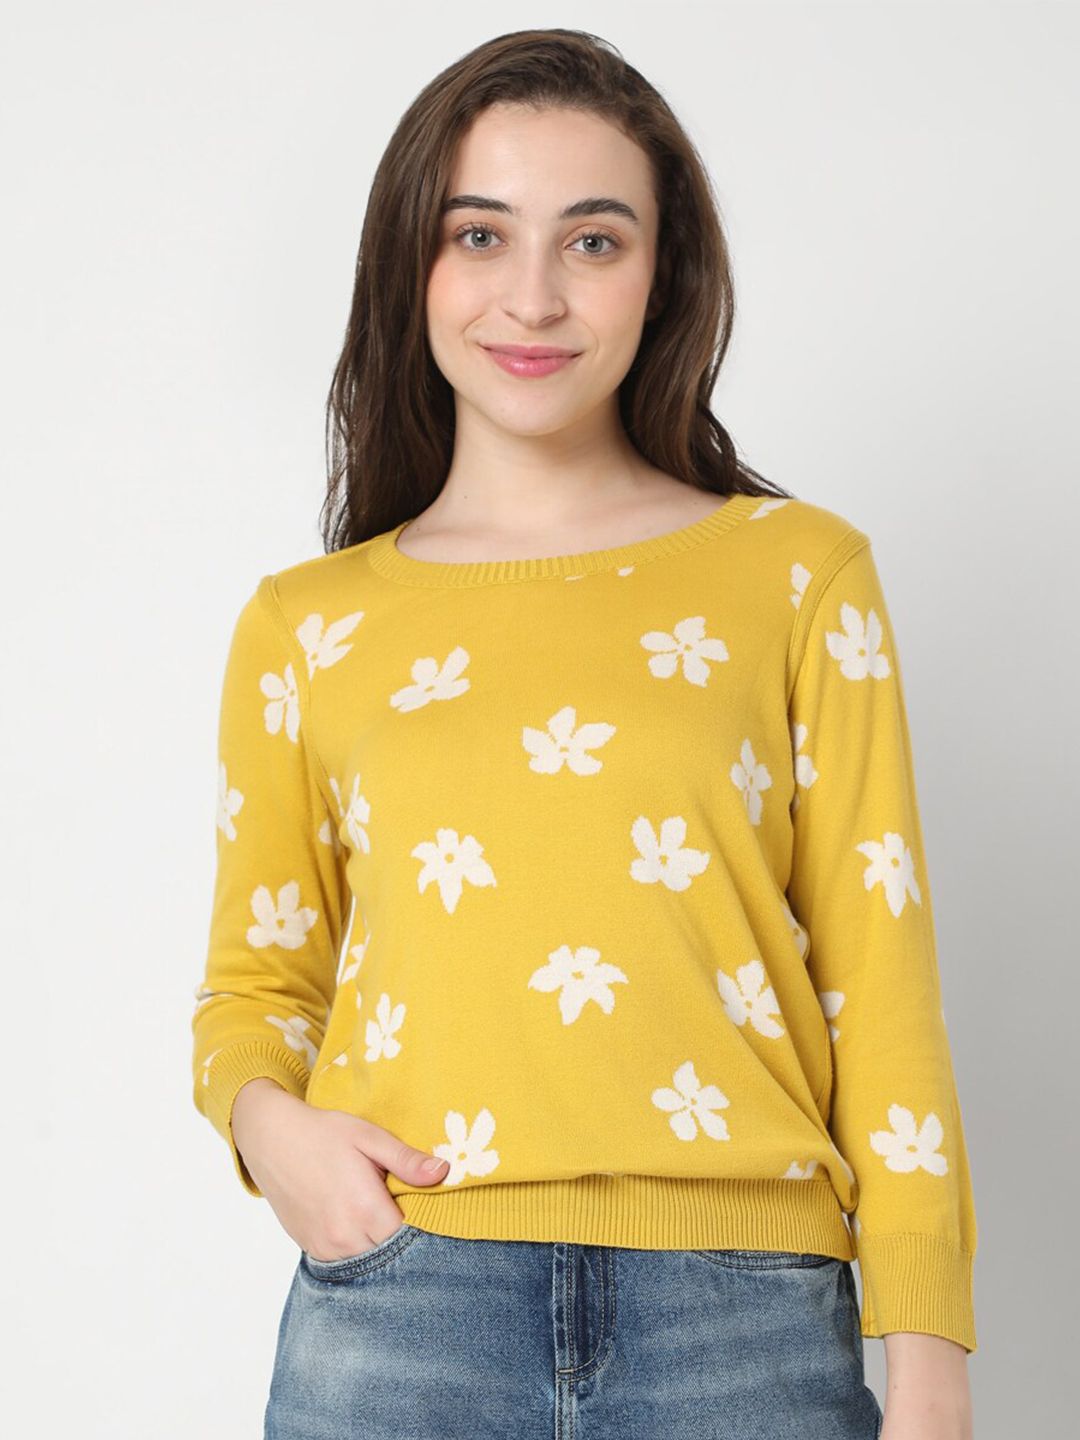 Vero Moda Women Yellow & White Floral Printed Sweater Vest Price in India